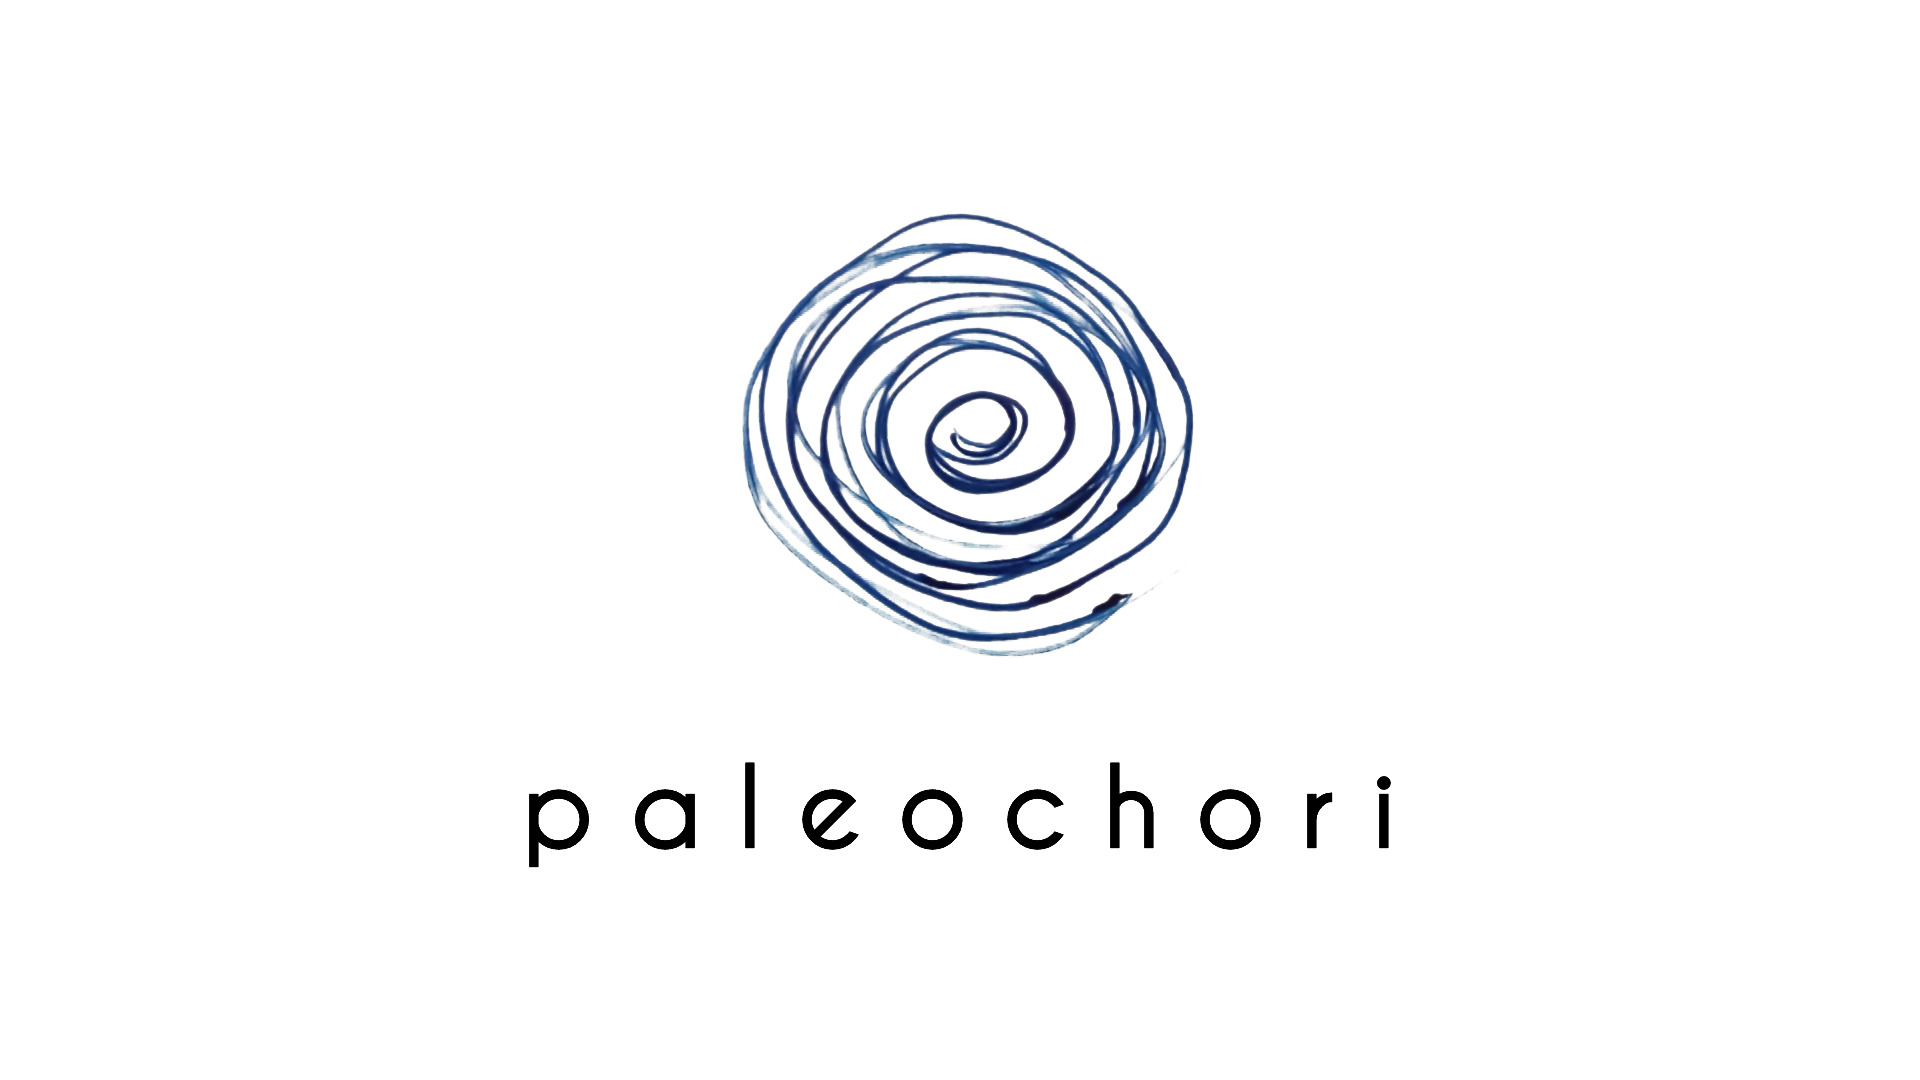 Paleochori